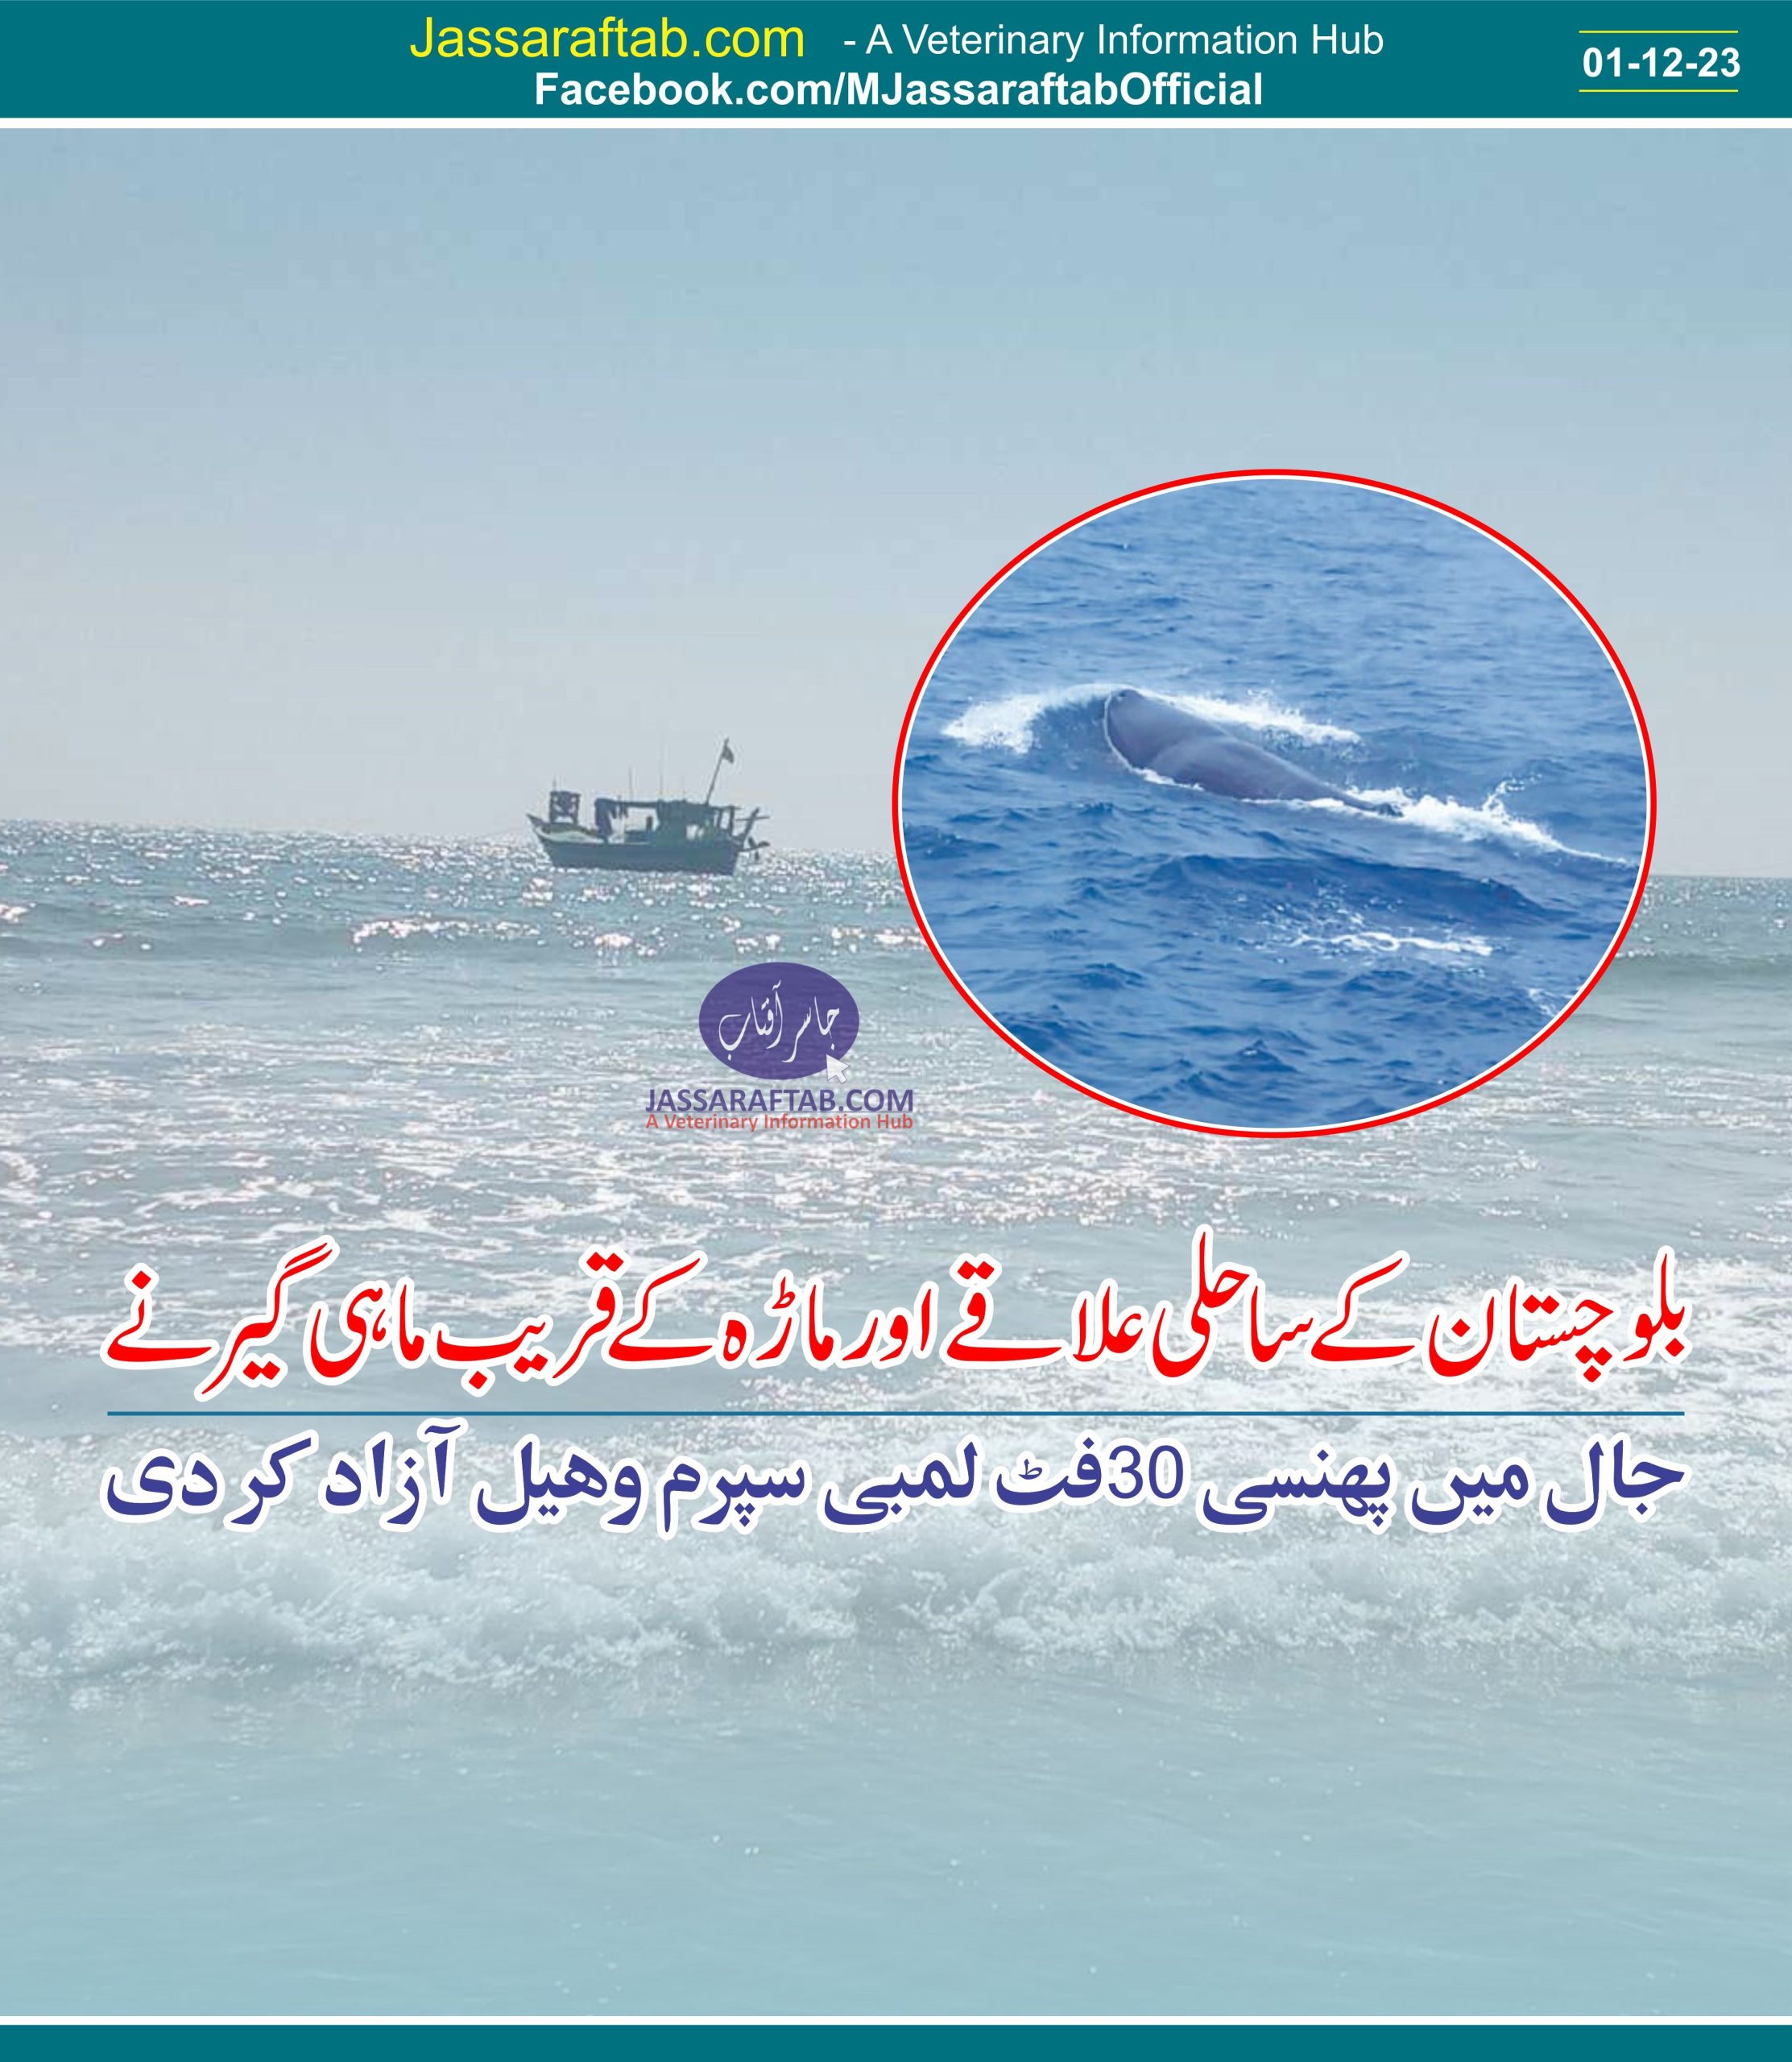 Wwf world wildlife fund trained fisherman released a big sperm whale stuck in his fishing net near ormara beach balochistan